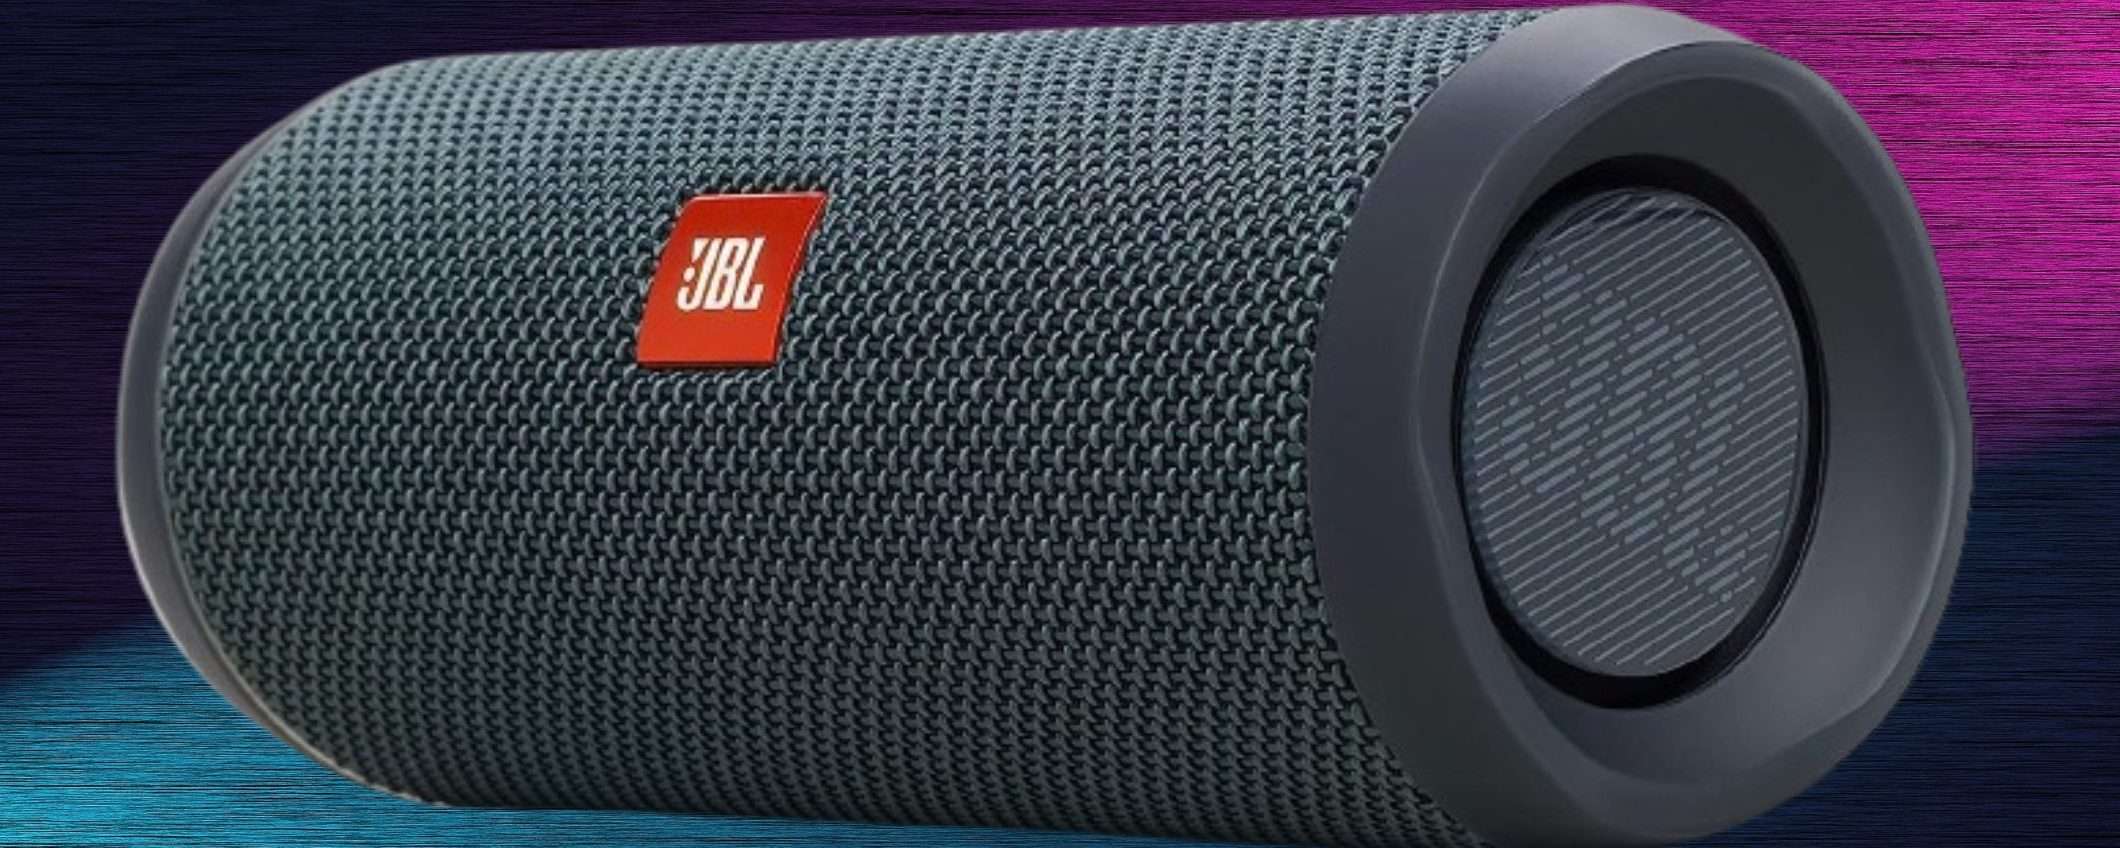 JBL Flip Essential 2 a 79€ è un SOGNO: speaker super PREMIUM scontatissimo